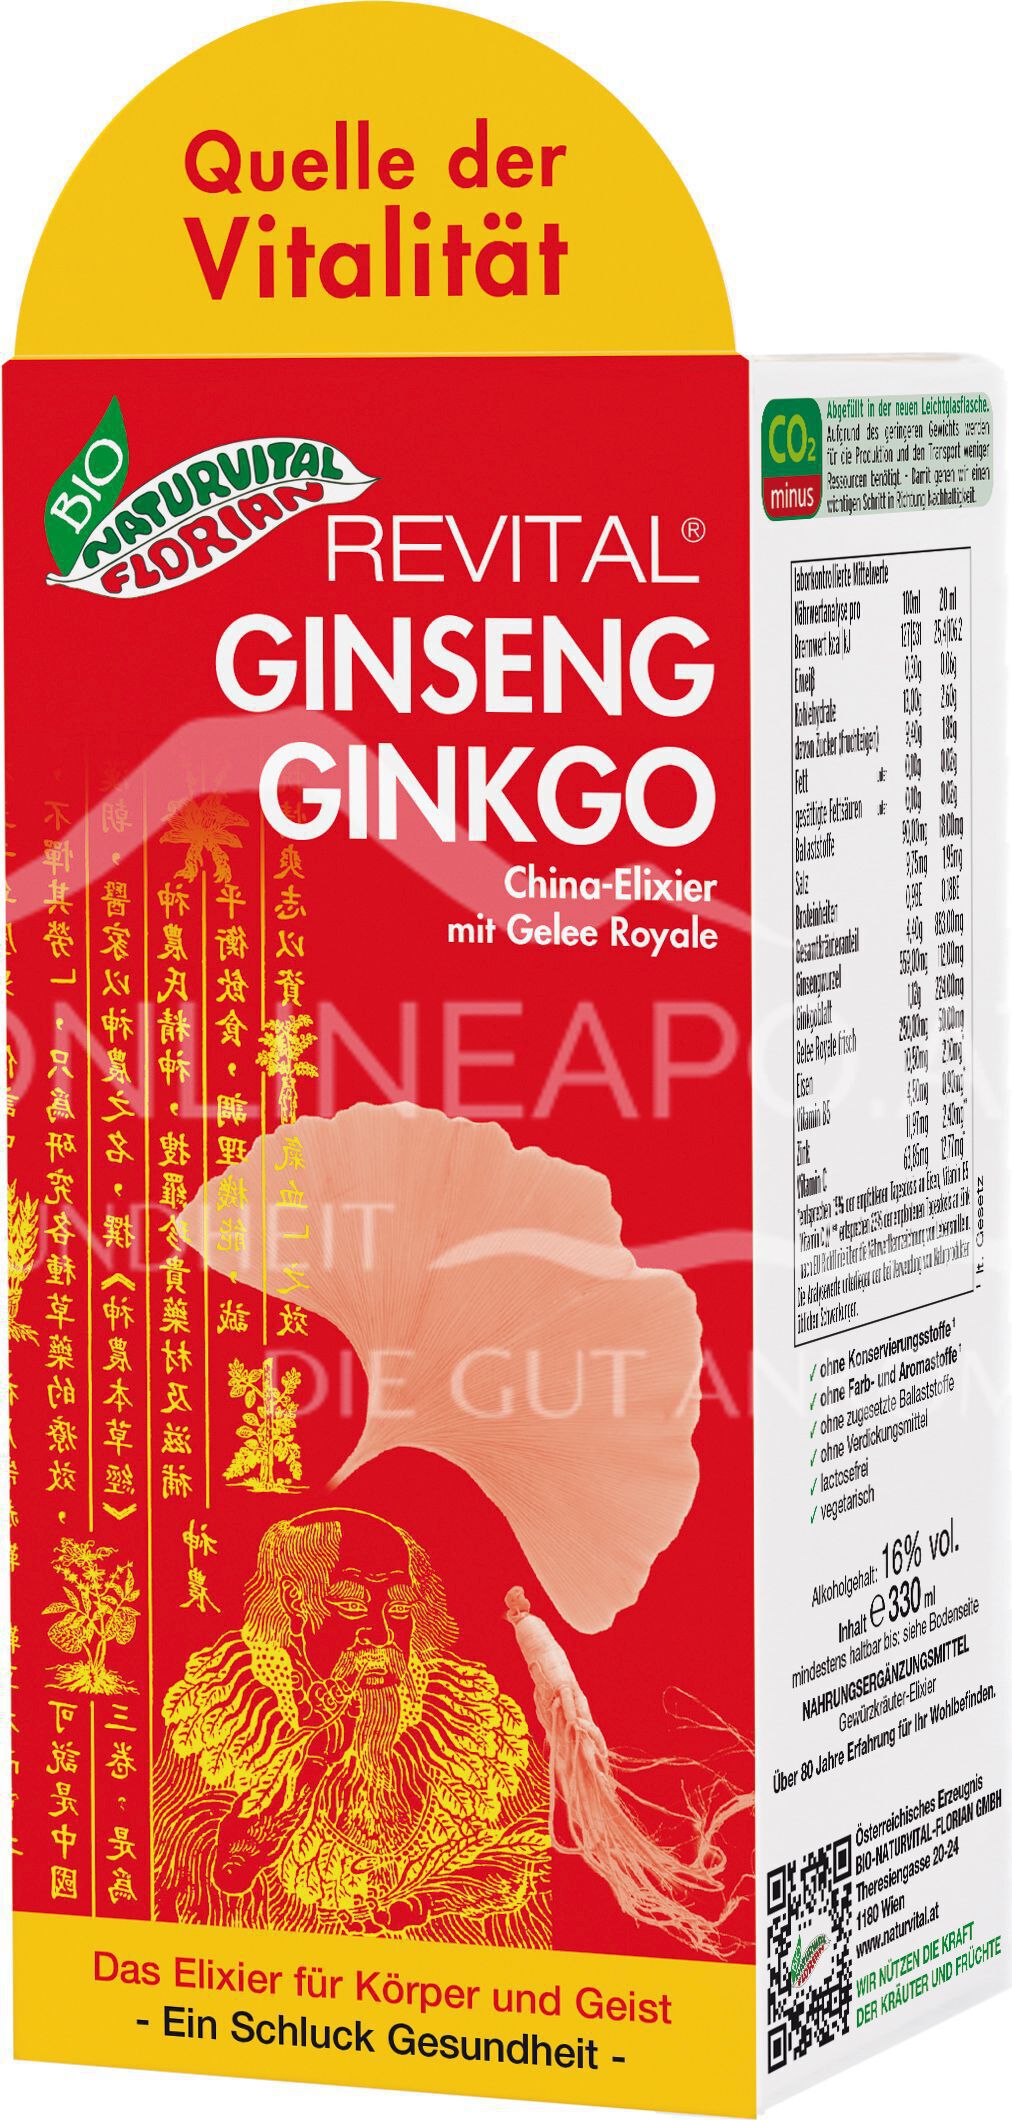 Bio Naturvital Florian Revital Ginseng Ginkgo China-Elixier